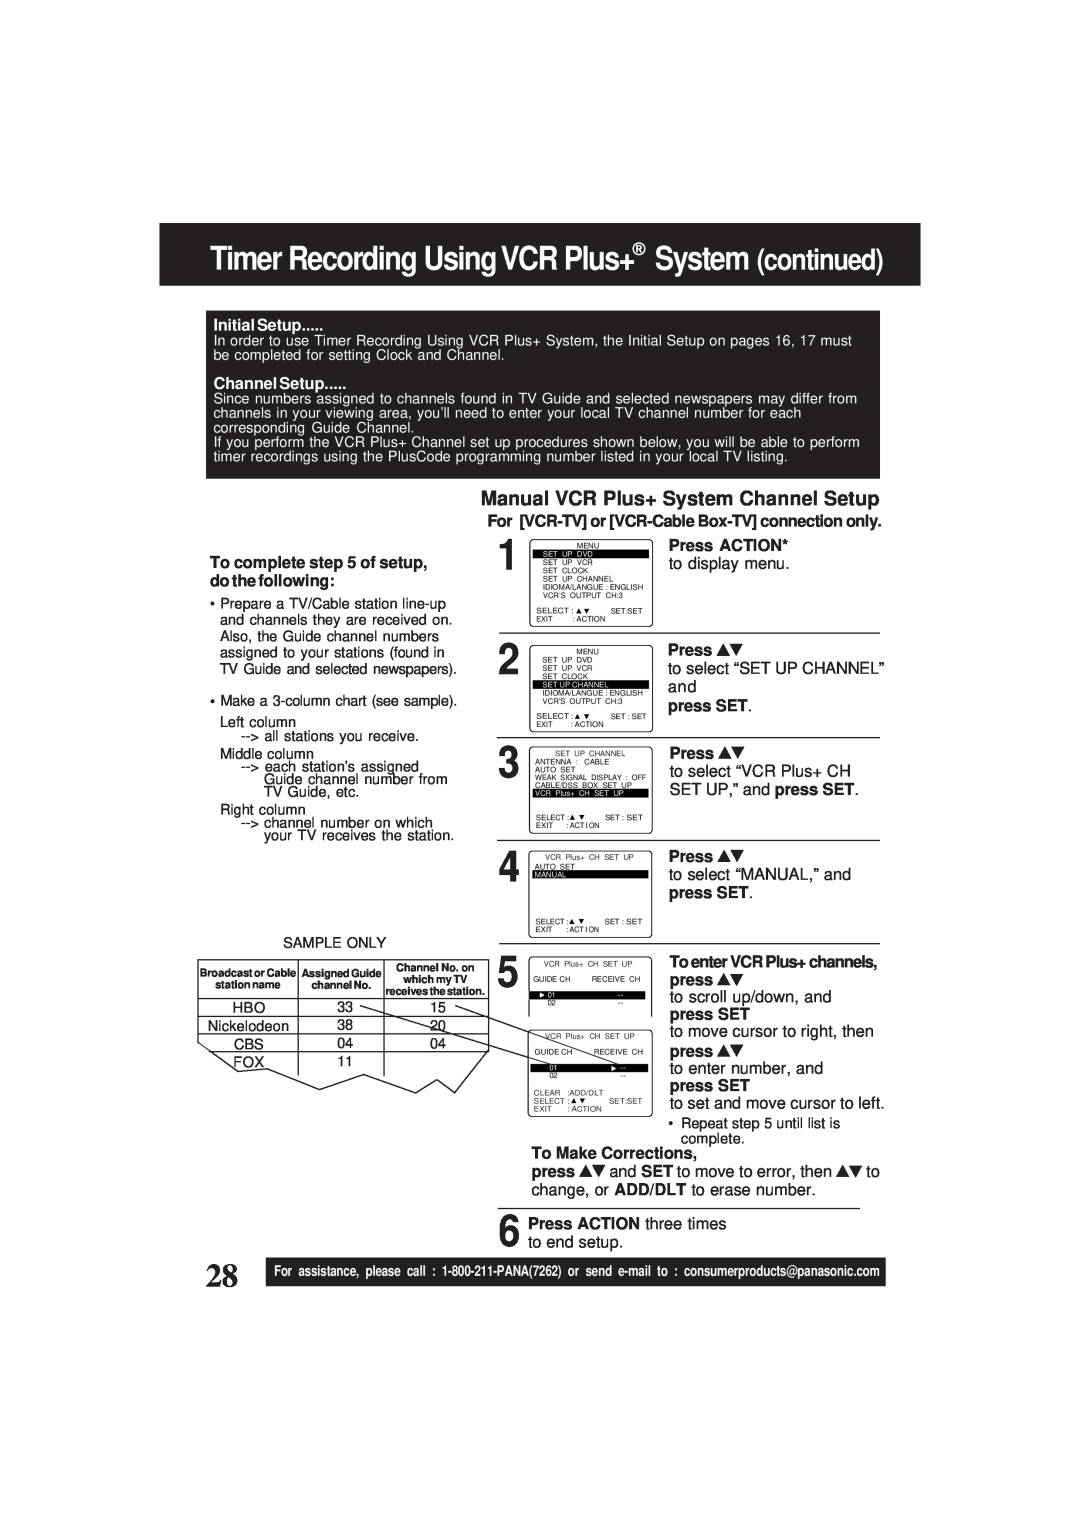 Panasonic PV-D4761 Timer Recording UsingVCR Plus+ System continued, Manual VCR Plus+ System Channel Setup, Press ACTION 